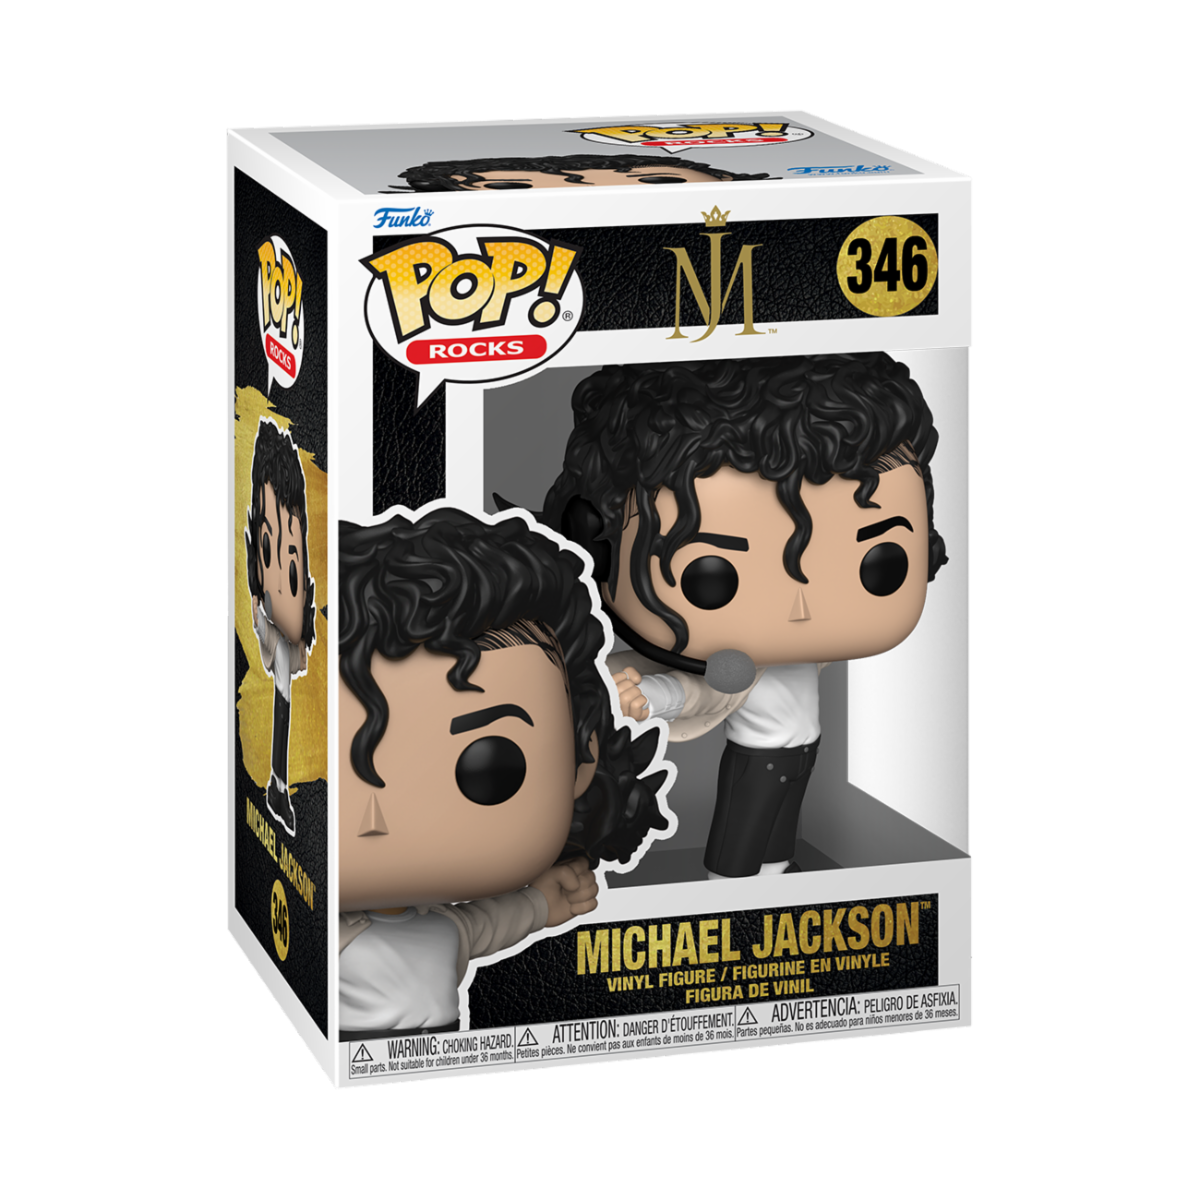 Michael Jackson (Superbowl) Funko Pop 346